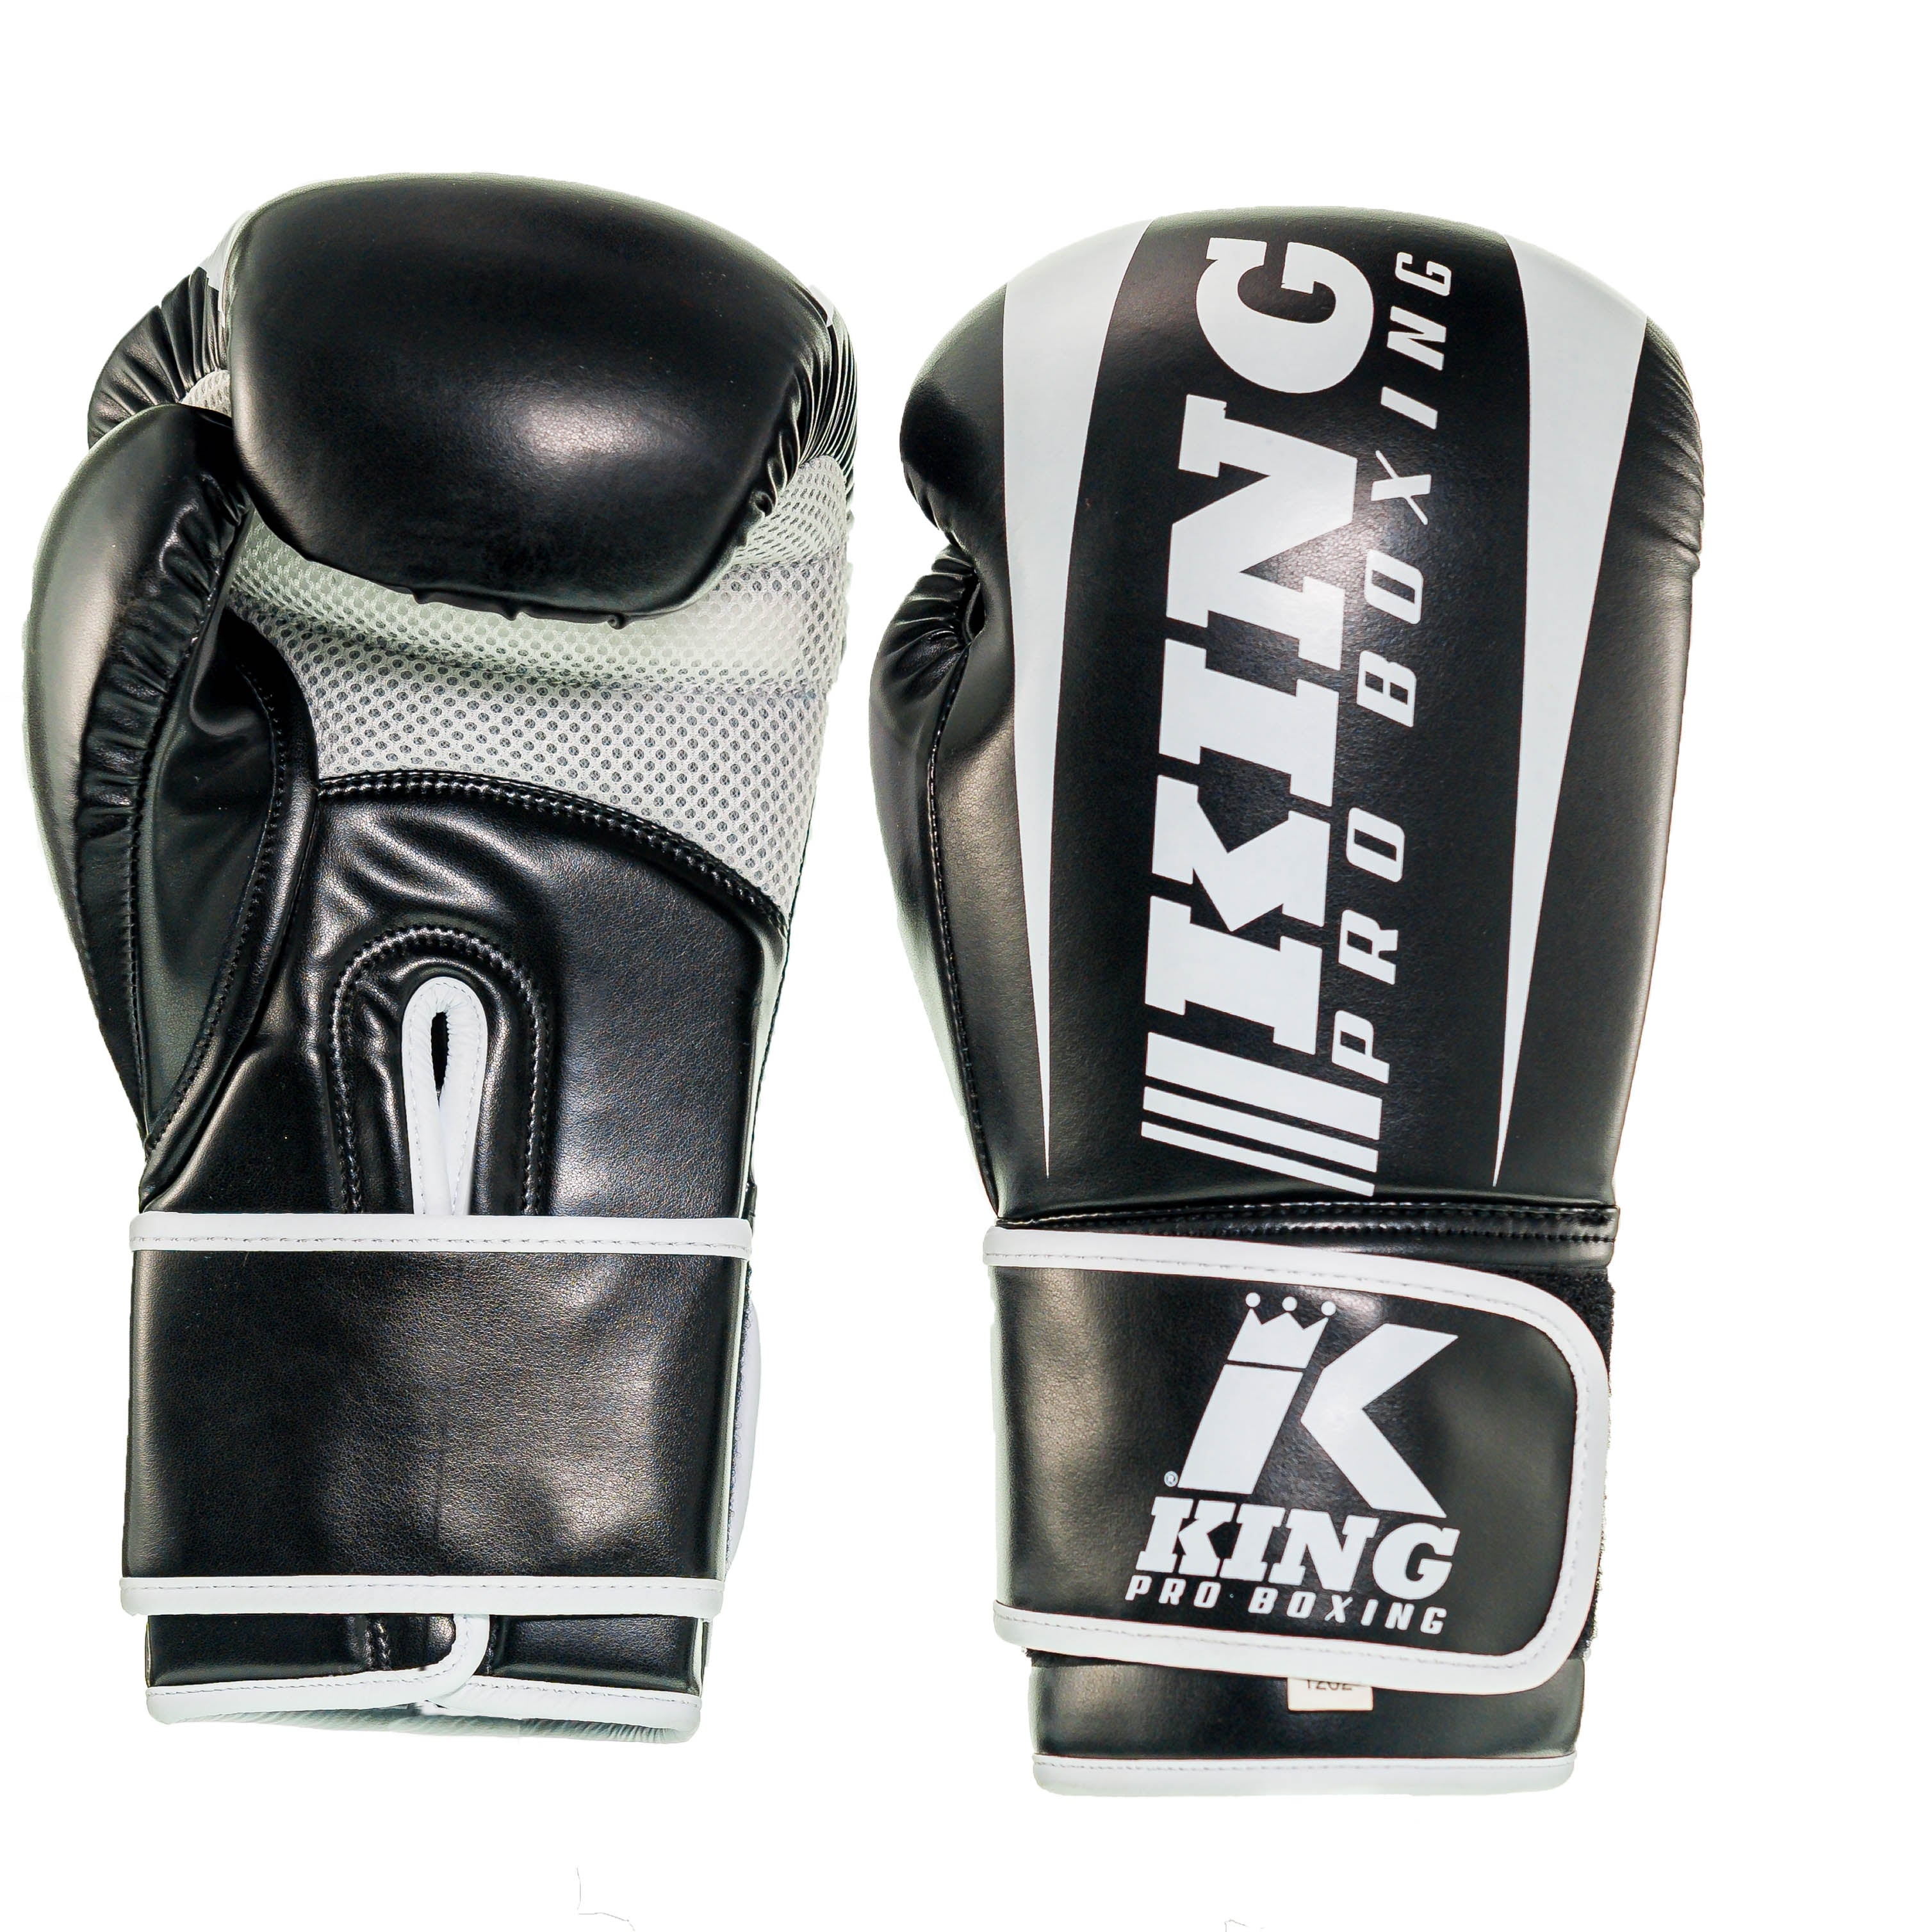 King PRO boxing boxing gloves - REVO 1